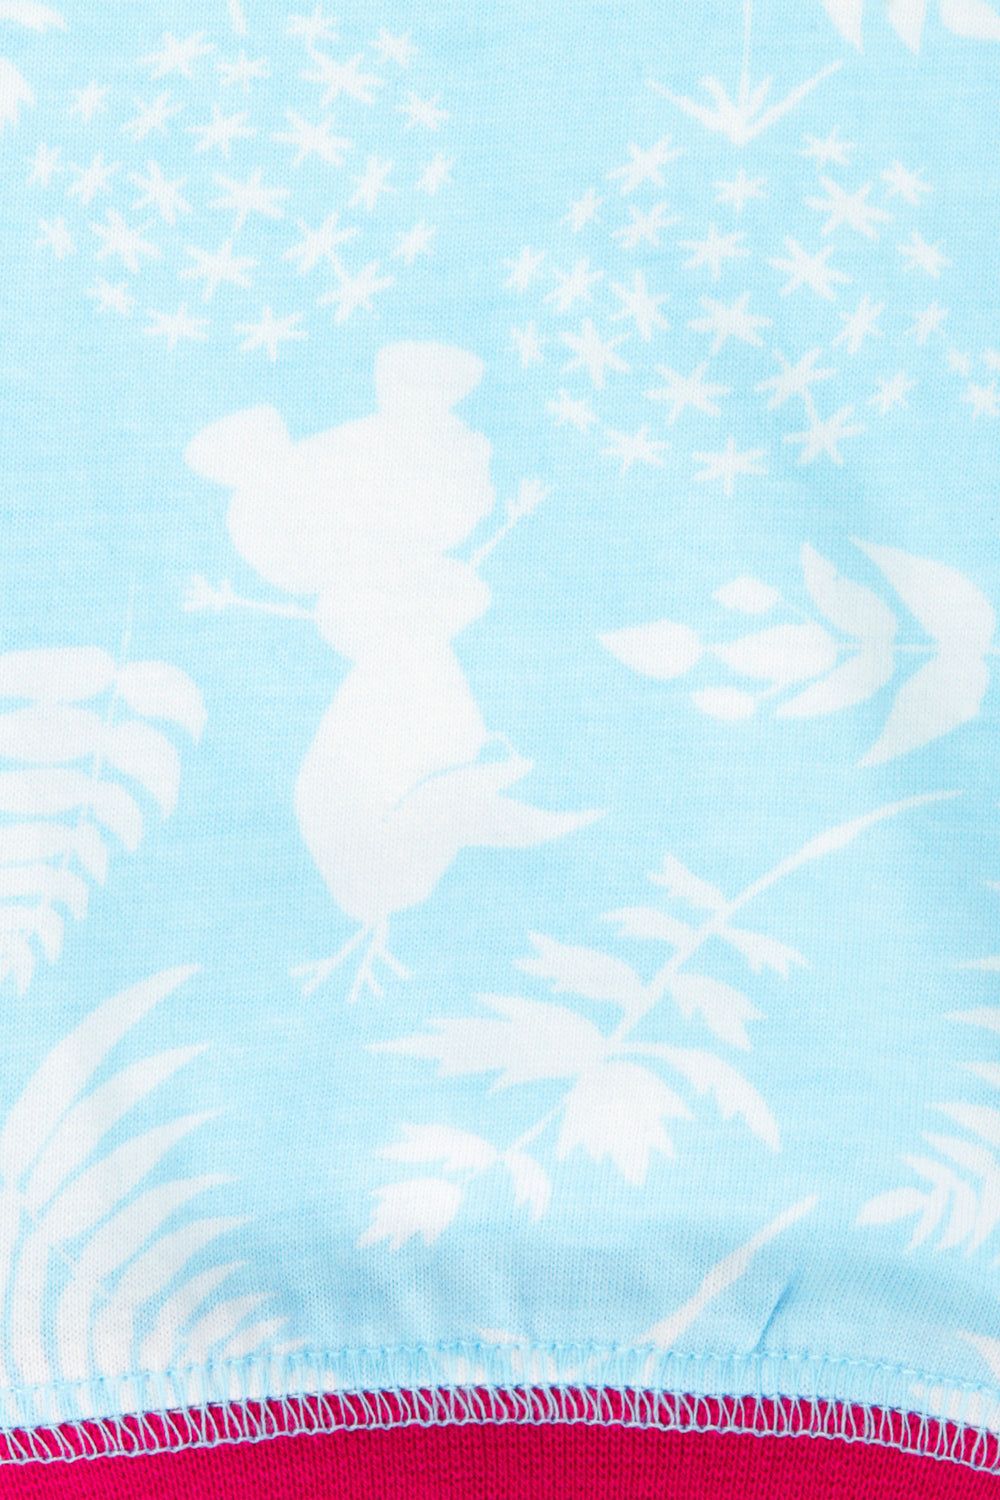 Girls Disney Frozen Anna Elsa Long Pyjamas - Pyjamas.com